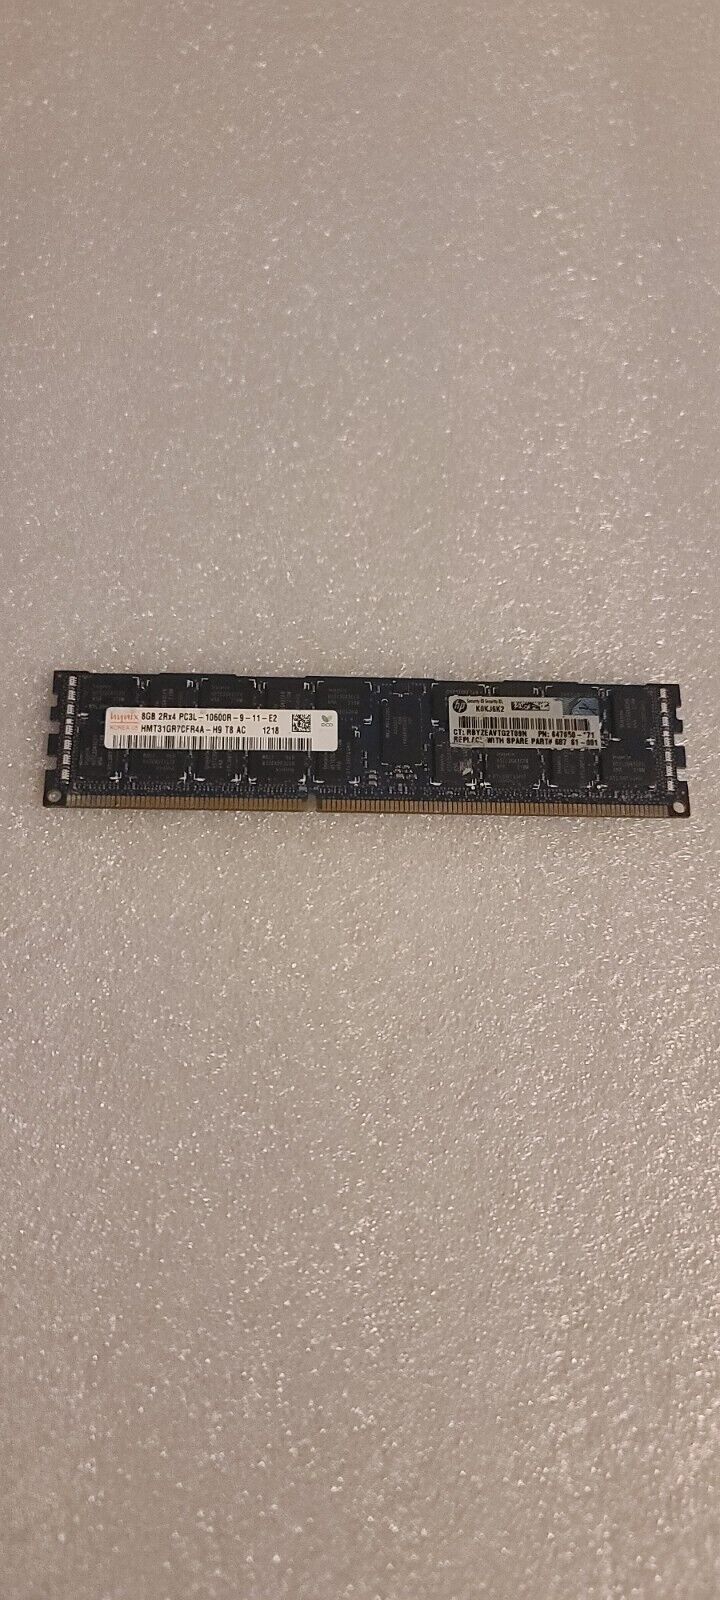 Hynix 8GB PC3L-10600R DDR3Server Memory (HMT31GR7CFR4A-H9) HP P/N 647650-171